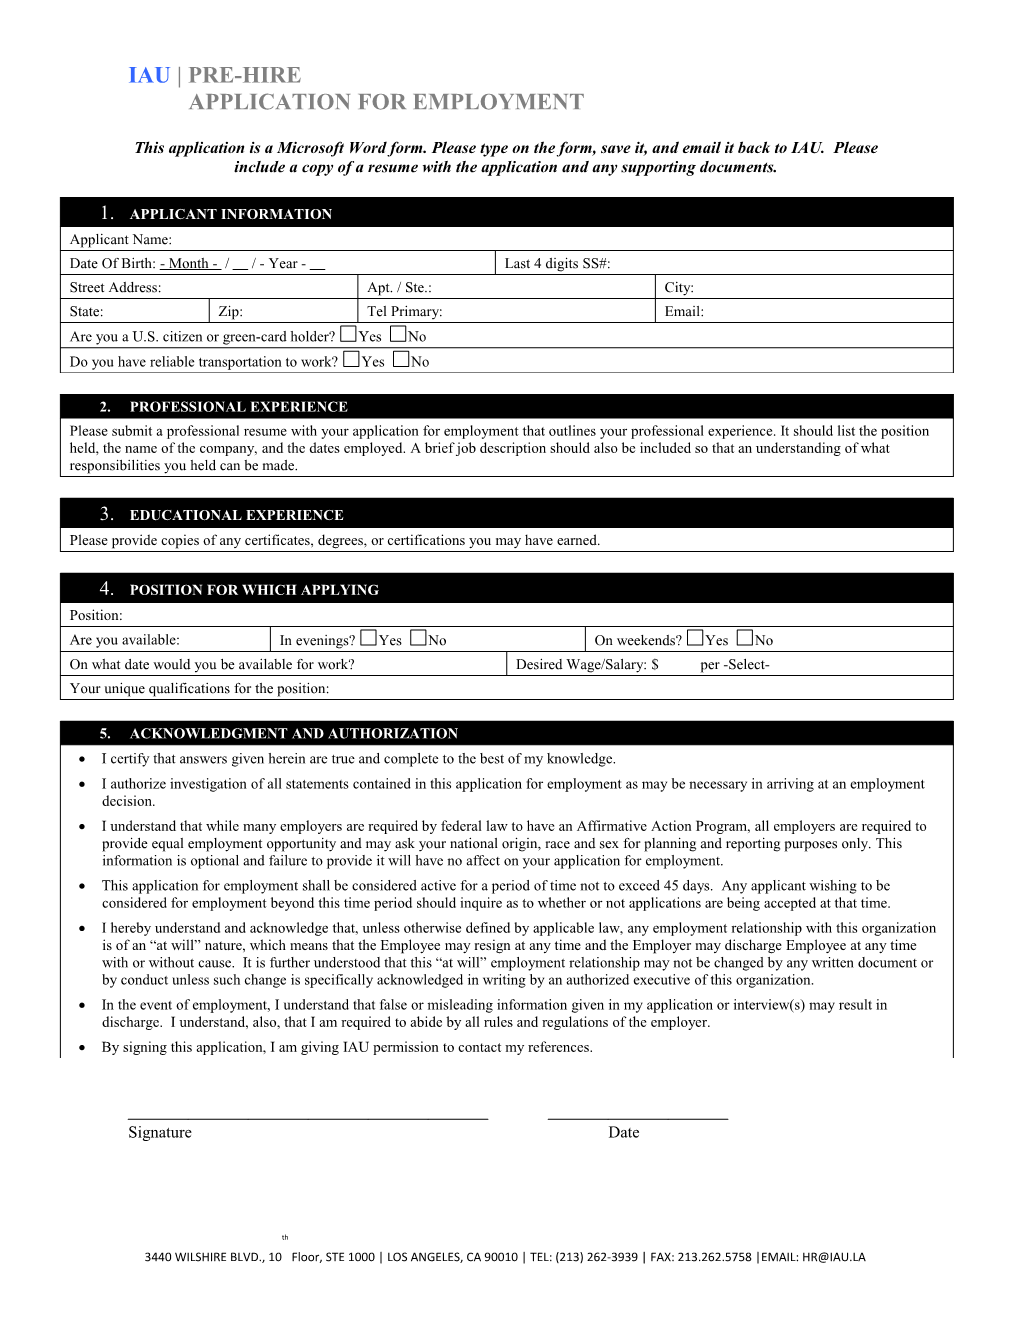 Job Interview Evaluation Form